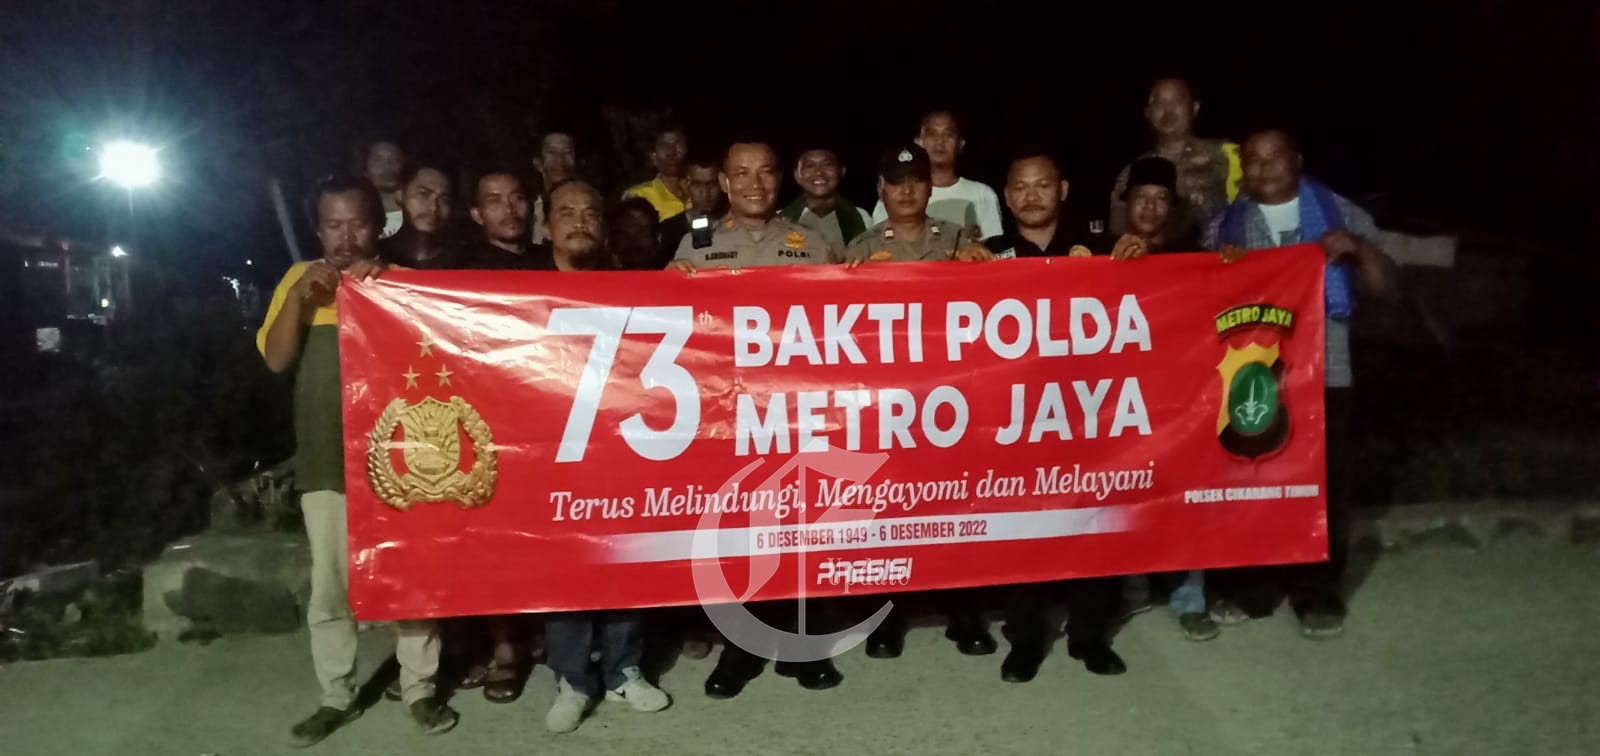 foto: warga dan Polsek Ciktim foto bersama, menyambut Bakti Polda Metro Jaya Ke-73 tahun